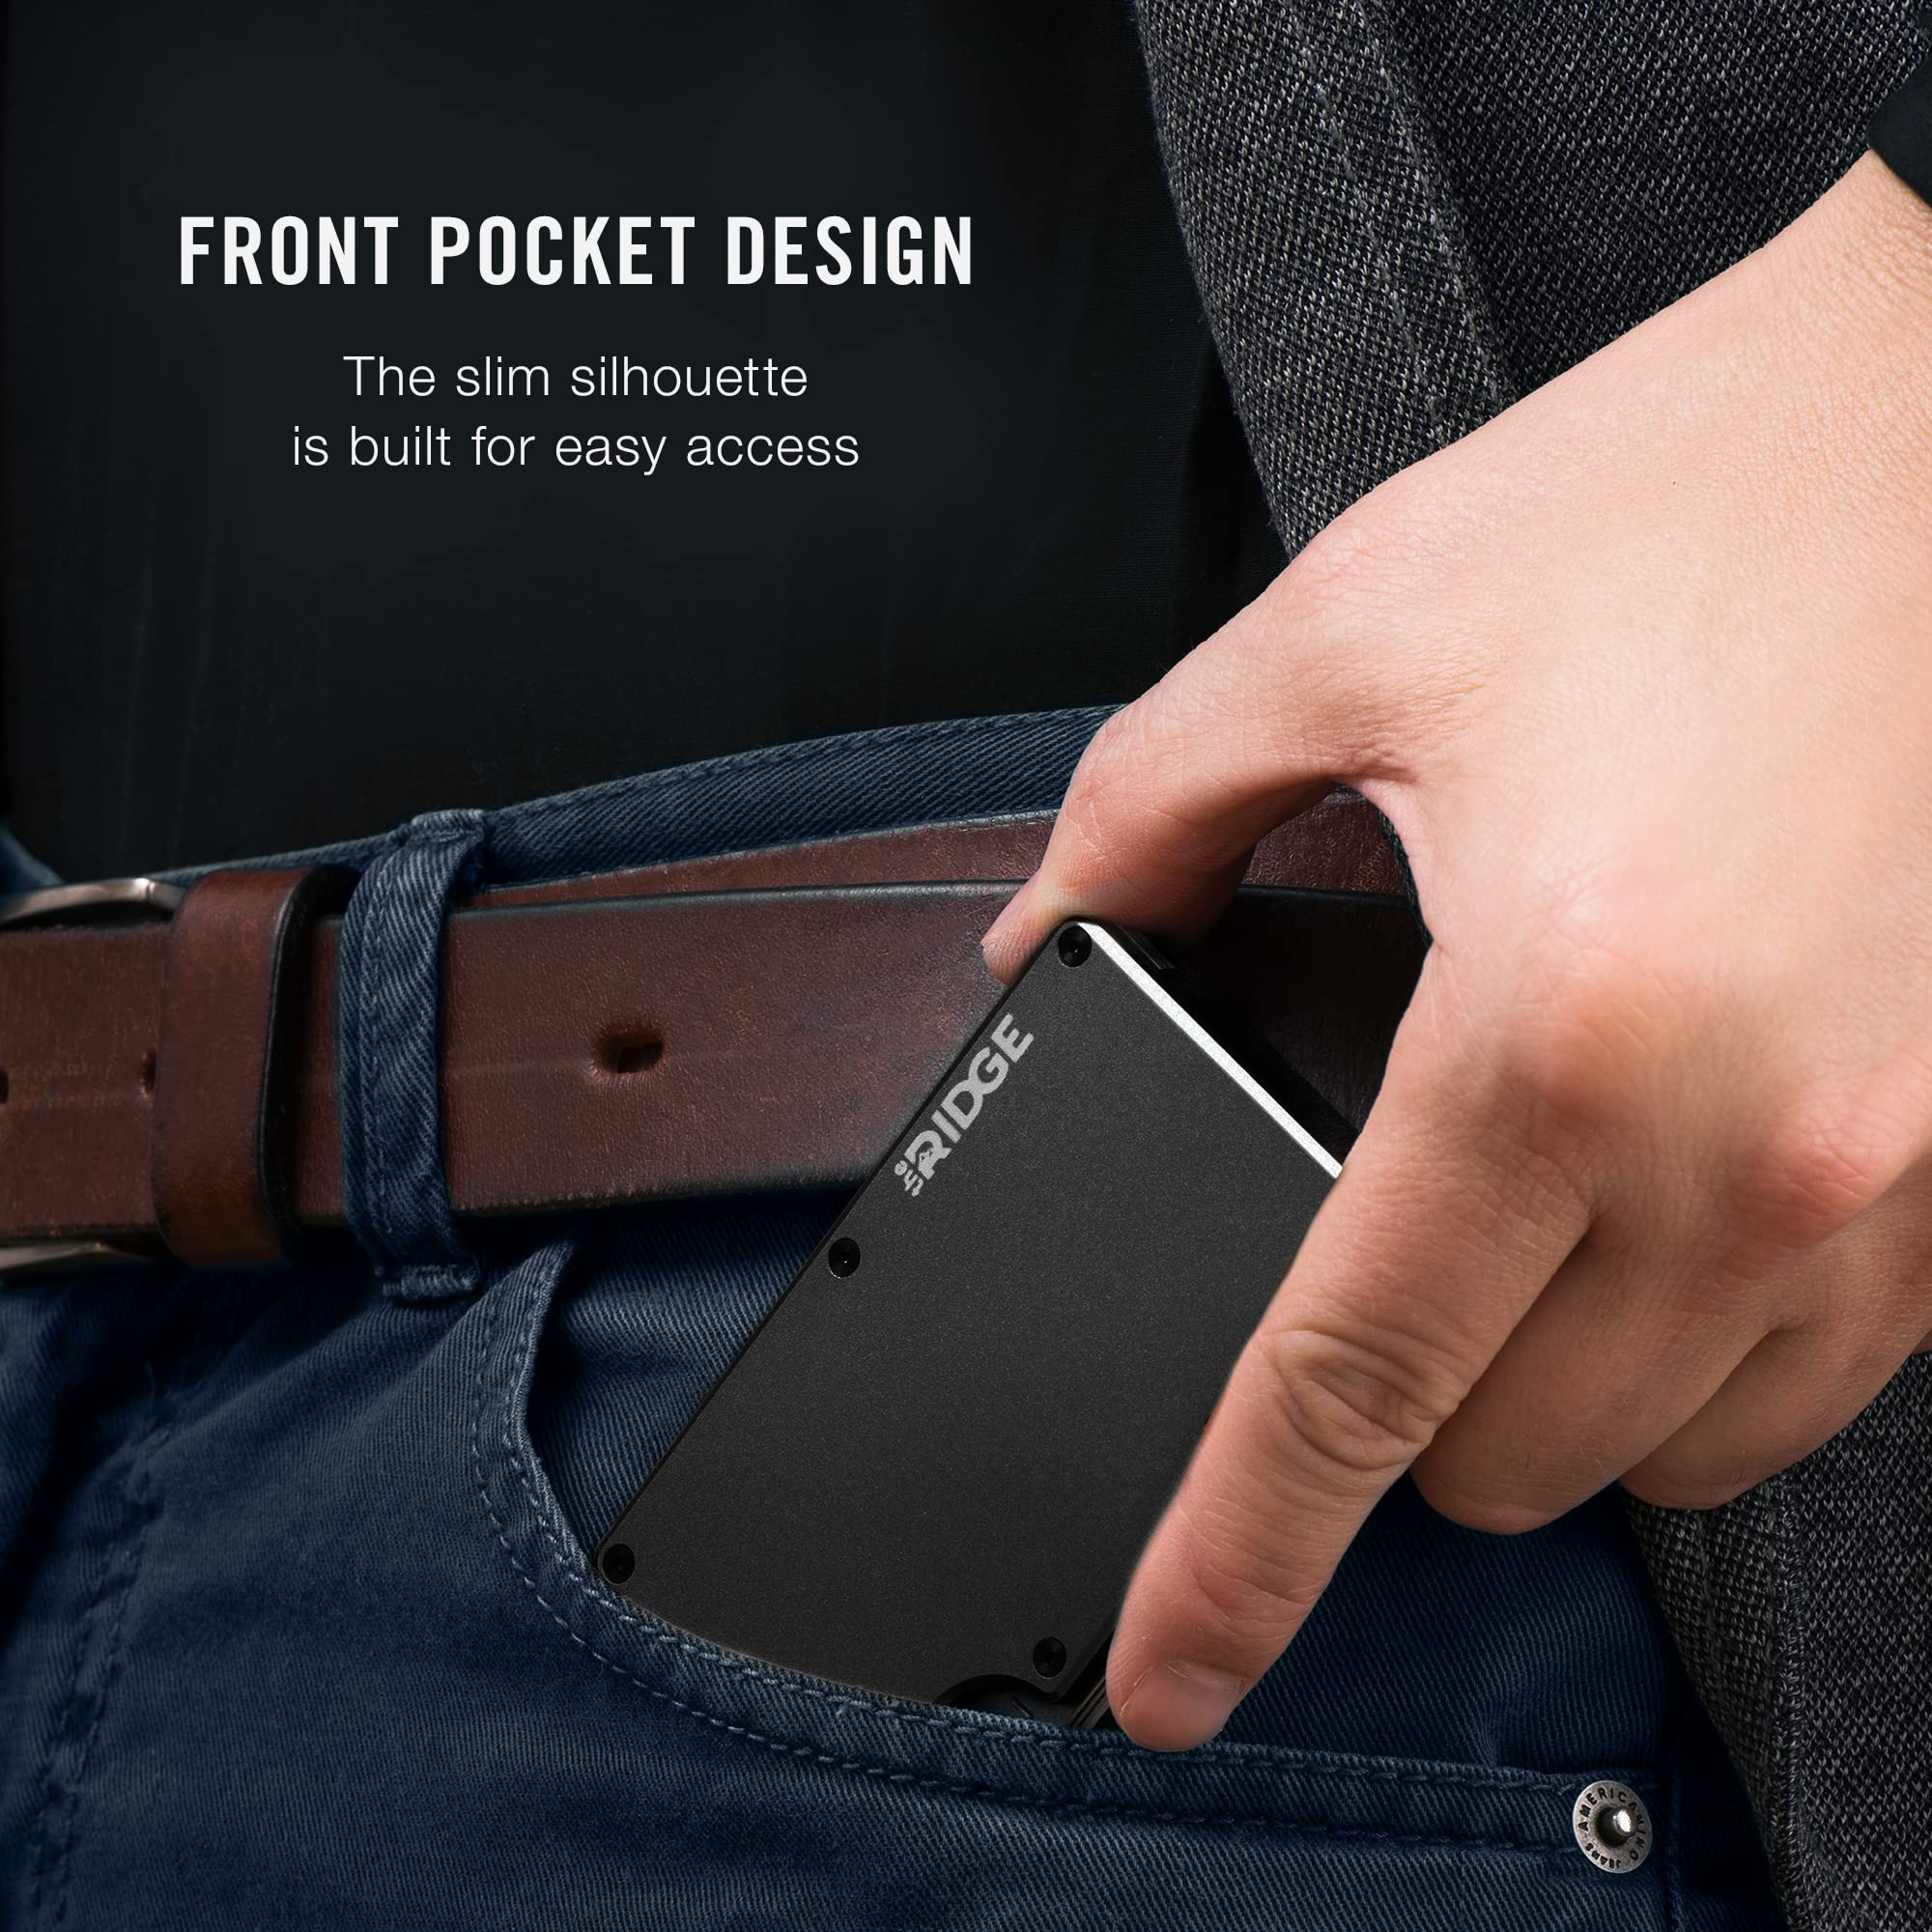 The Ridge Minimalist Slim Wallet For Men - RFID Blocking Front Pocket Credit Card Holder - Aluminum Metal Small Mens Wallets with Cash Strap (Black)